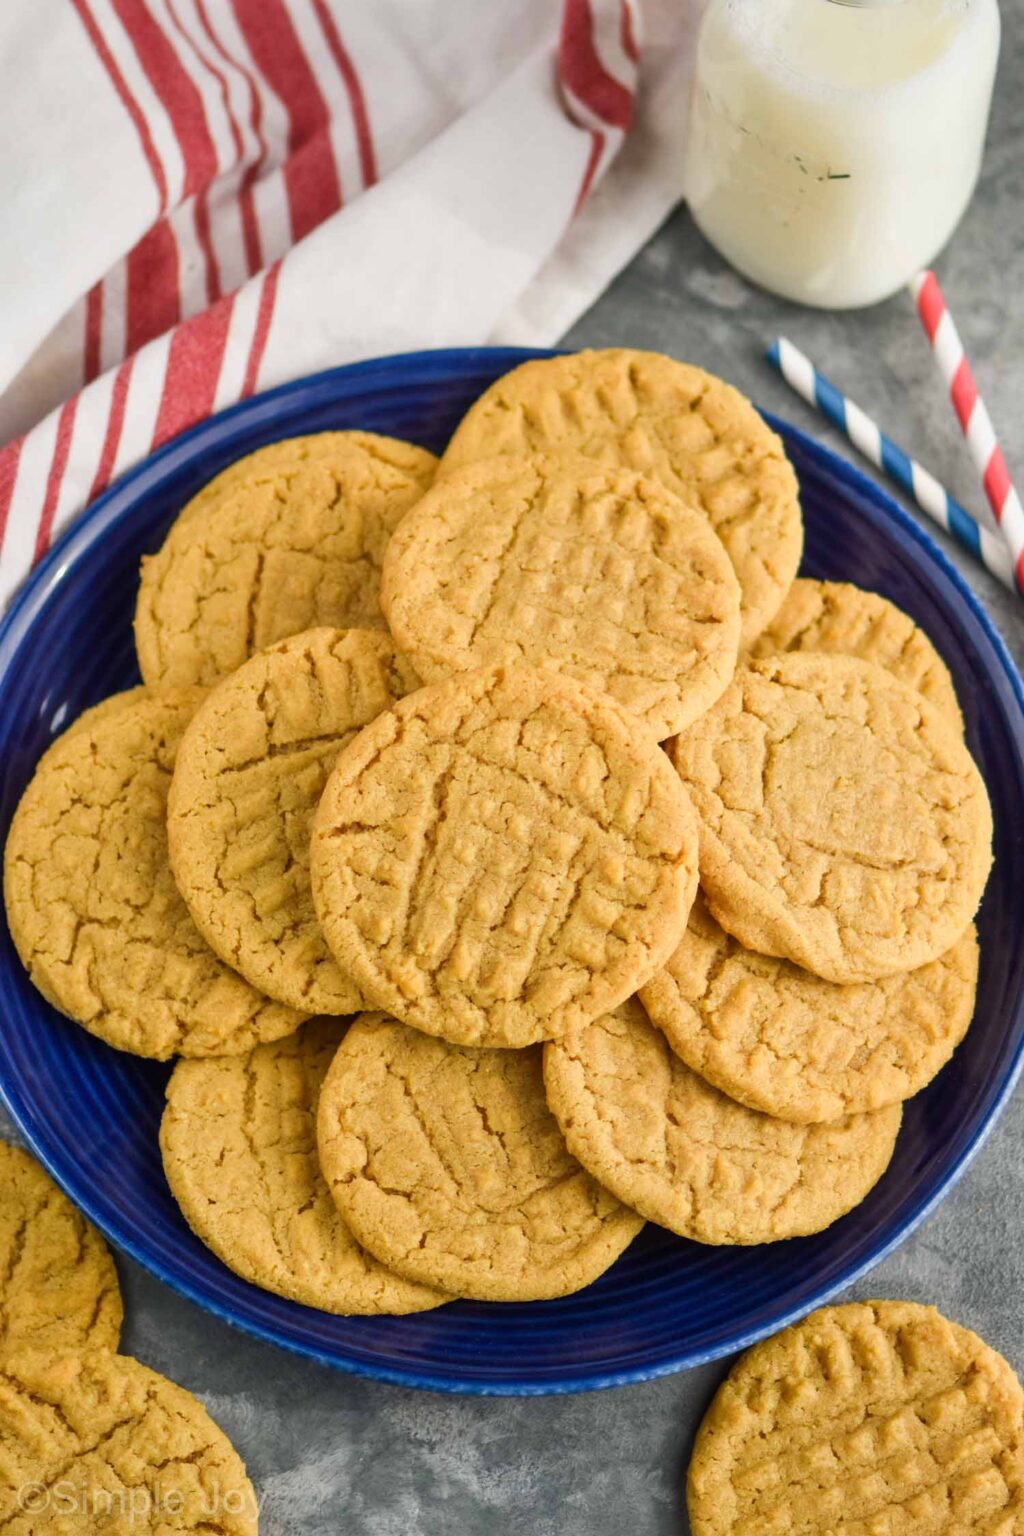 Best Peanut Butter Cookies - Simple Joy